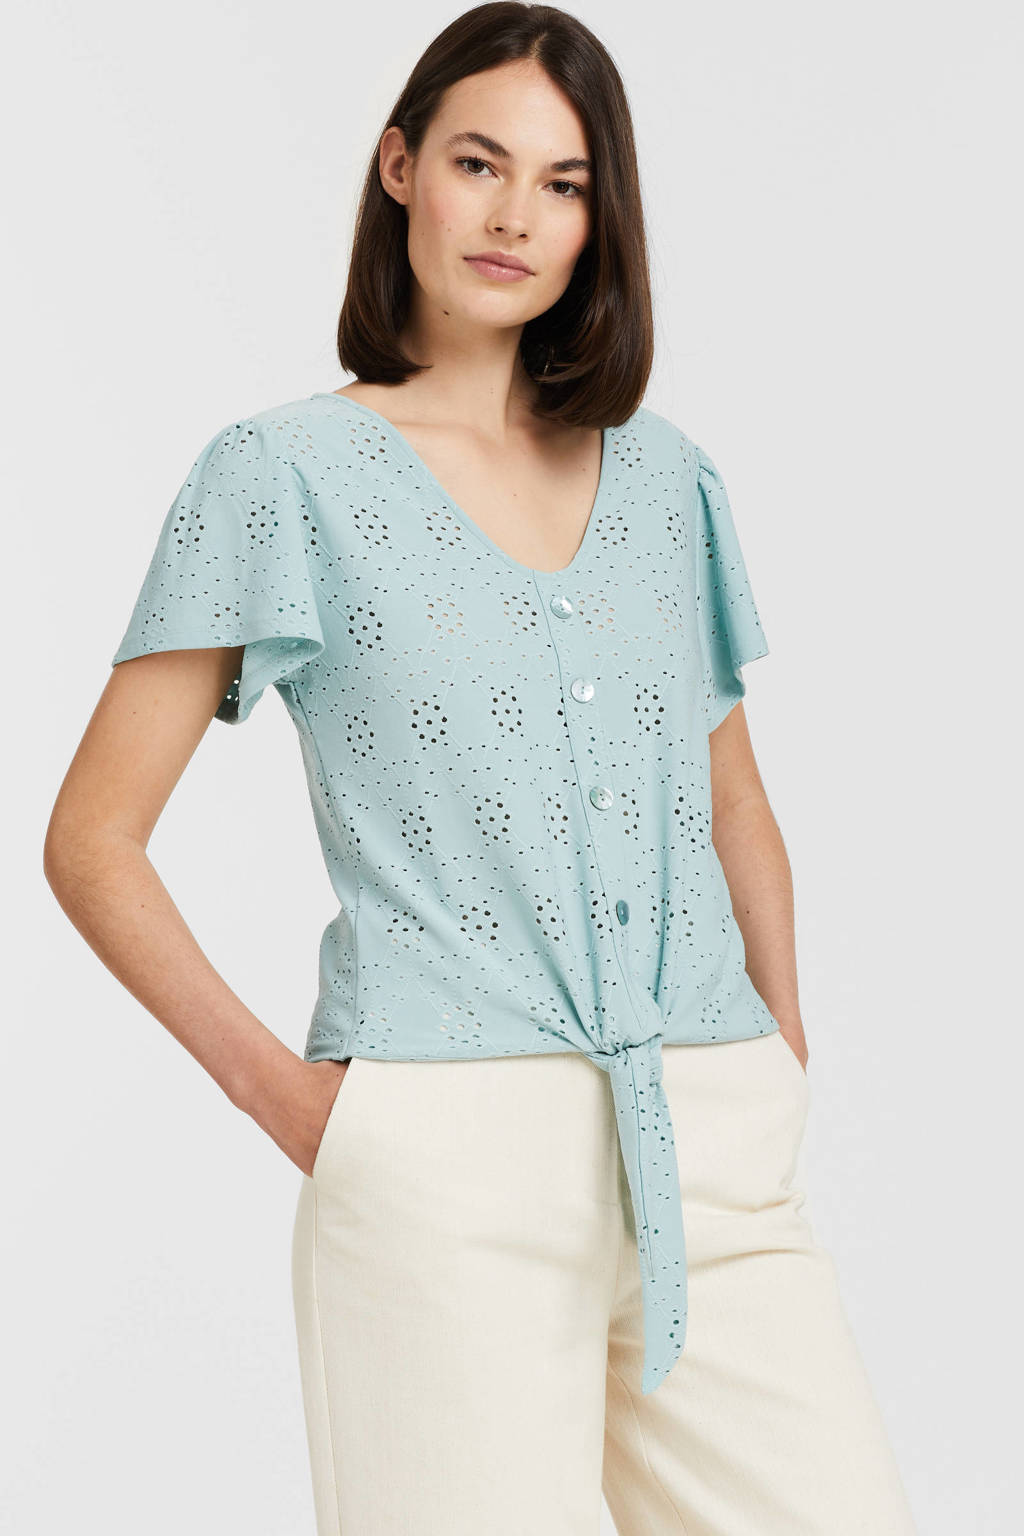 Turquoise dames Esqualo top Top Knot embroidery anglaise detail van polyester met korte mouwen en V-hals